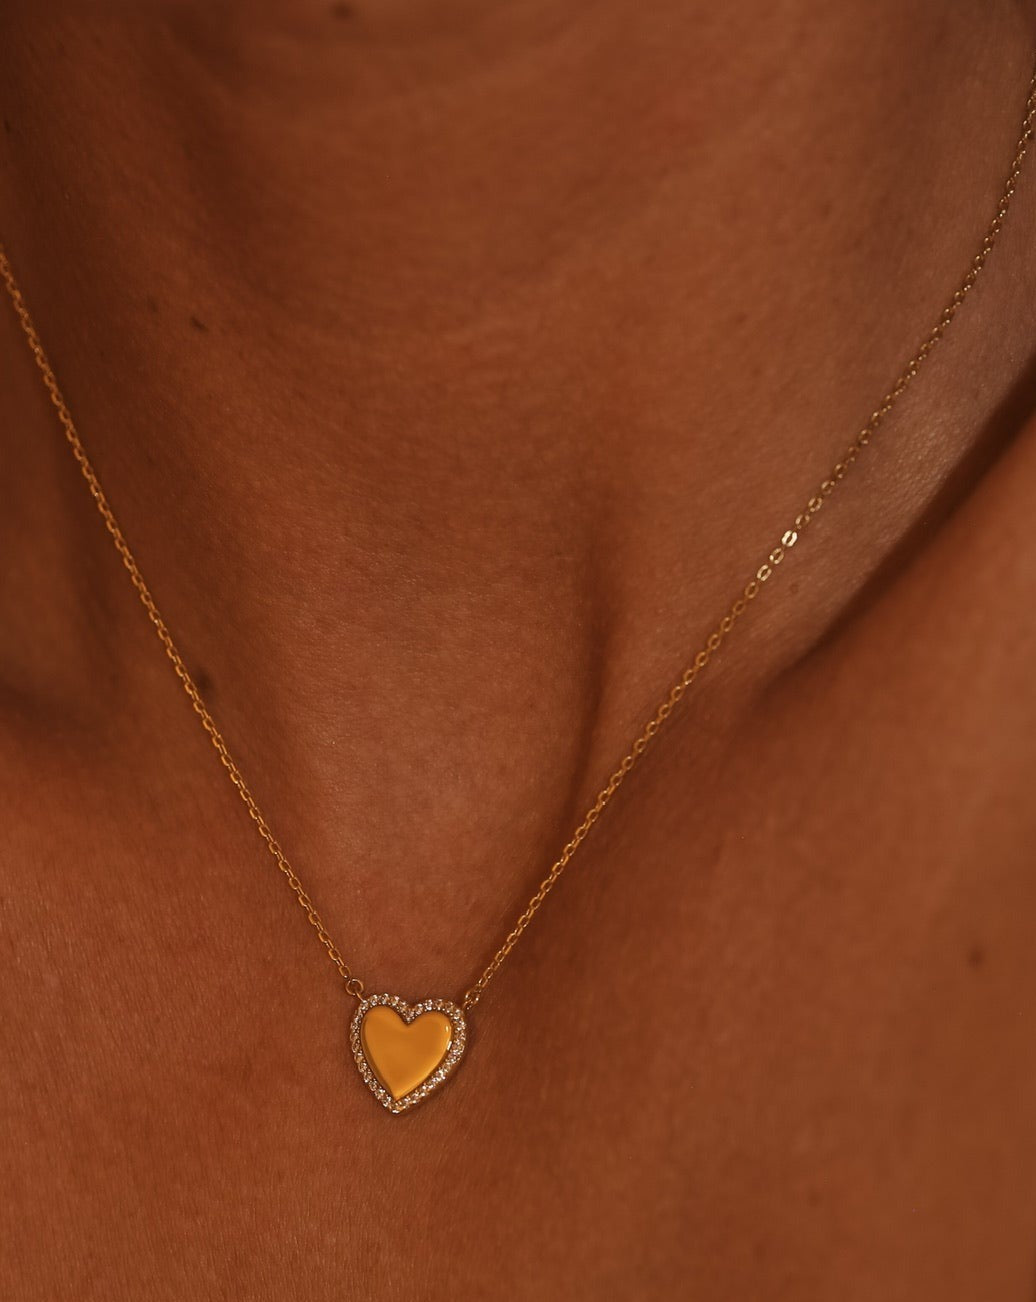 Heirloom Heart Necklace - Gold Vermeil